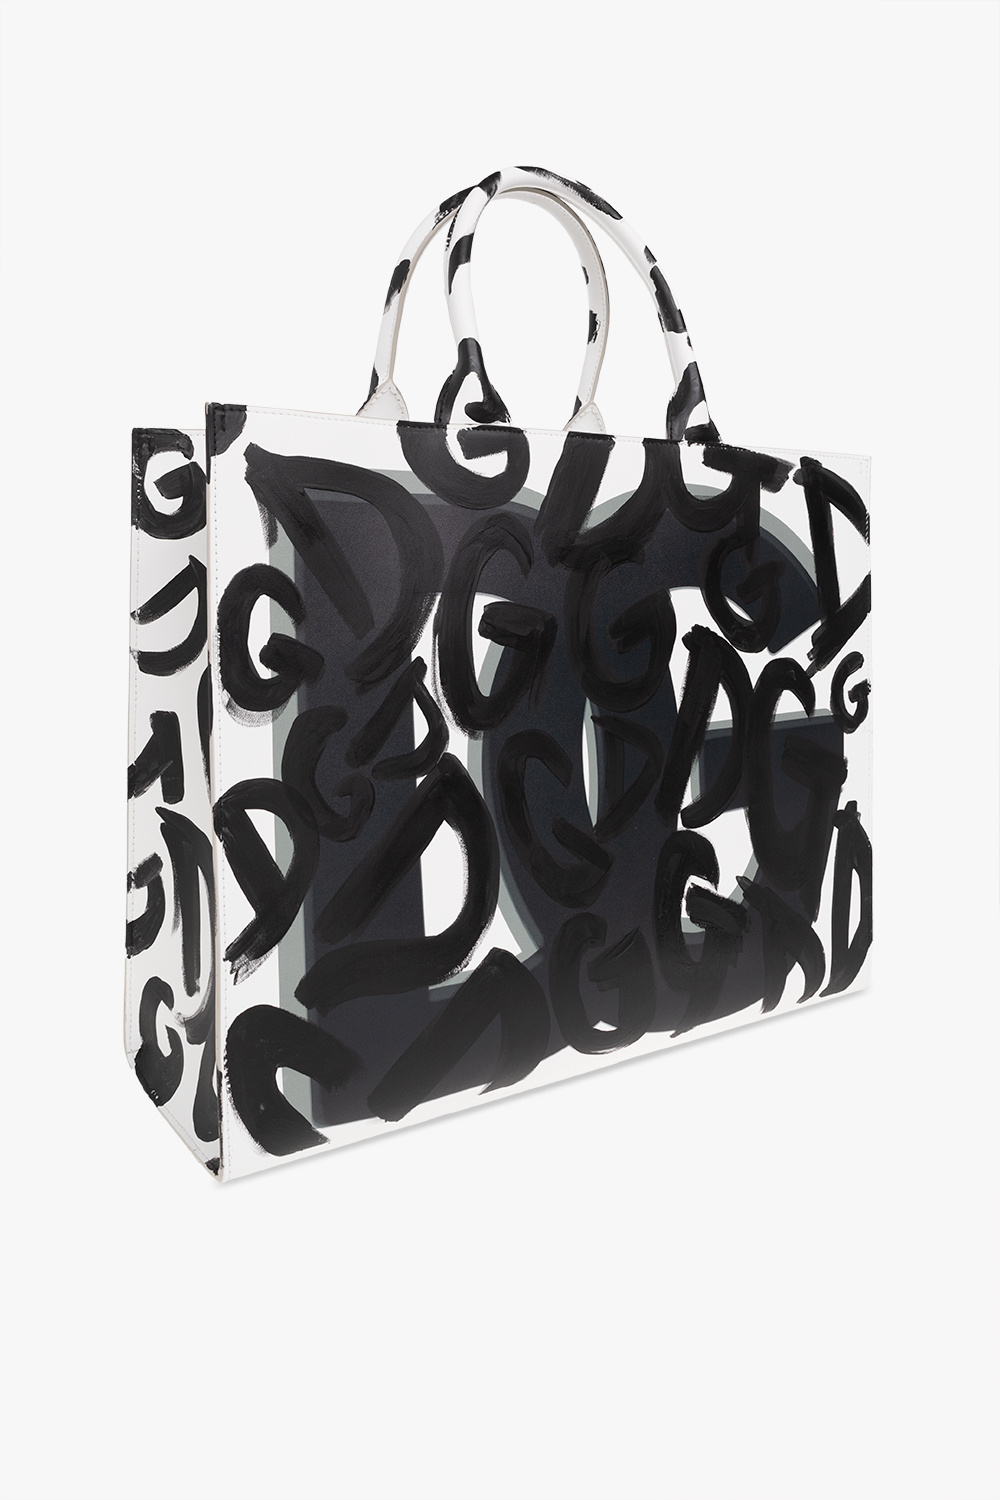 Dolce & Gabbana Kids спортивные брюки с логотипом ‘DG Daily Large’ shopper bag